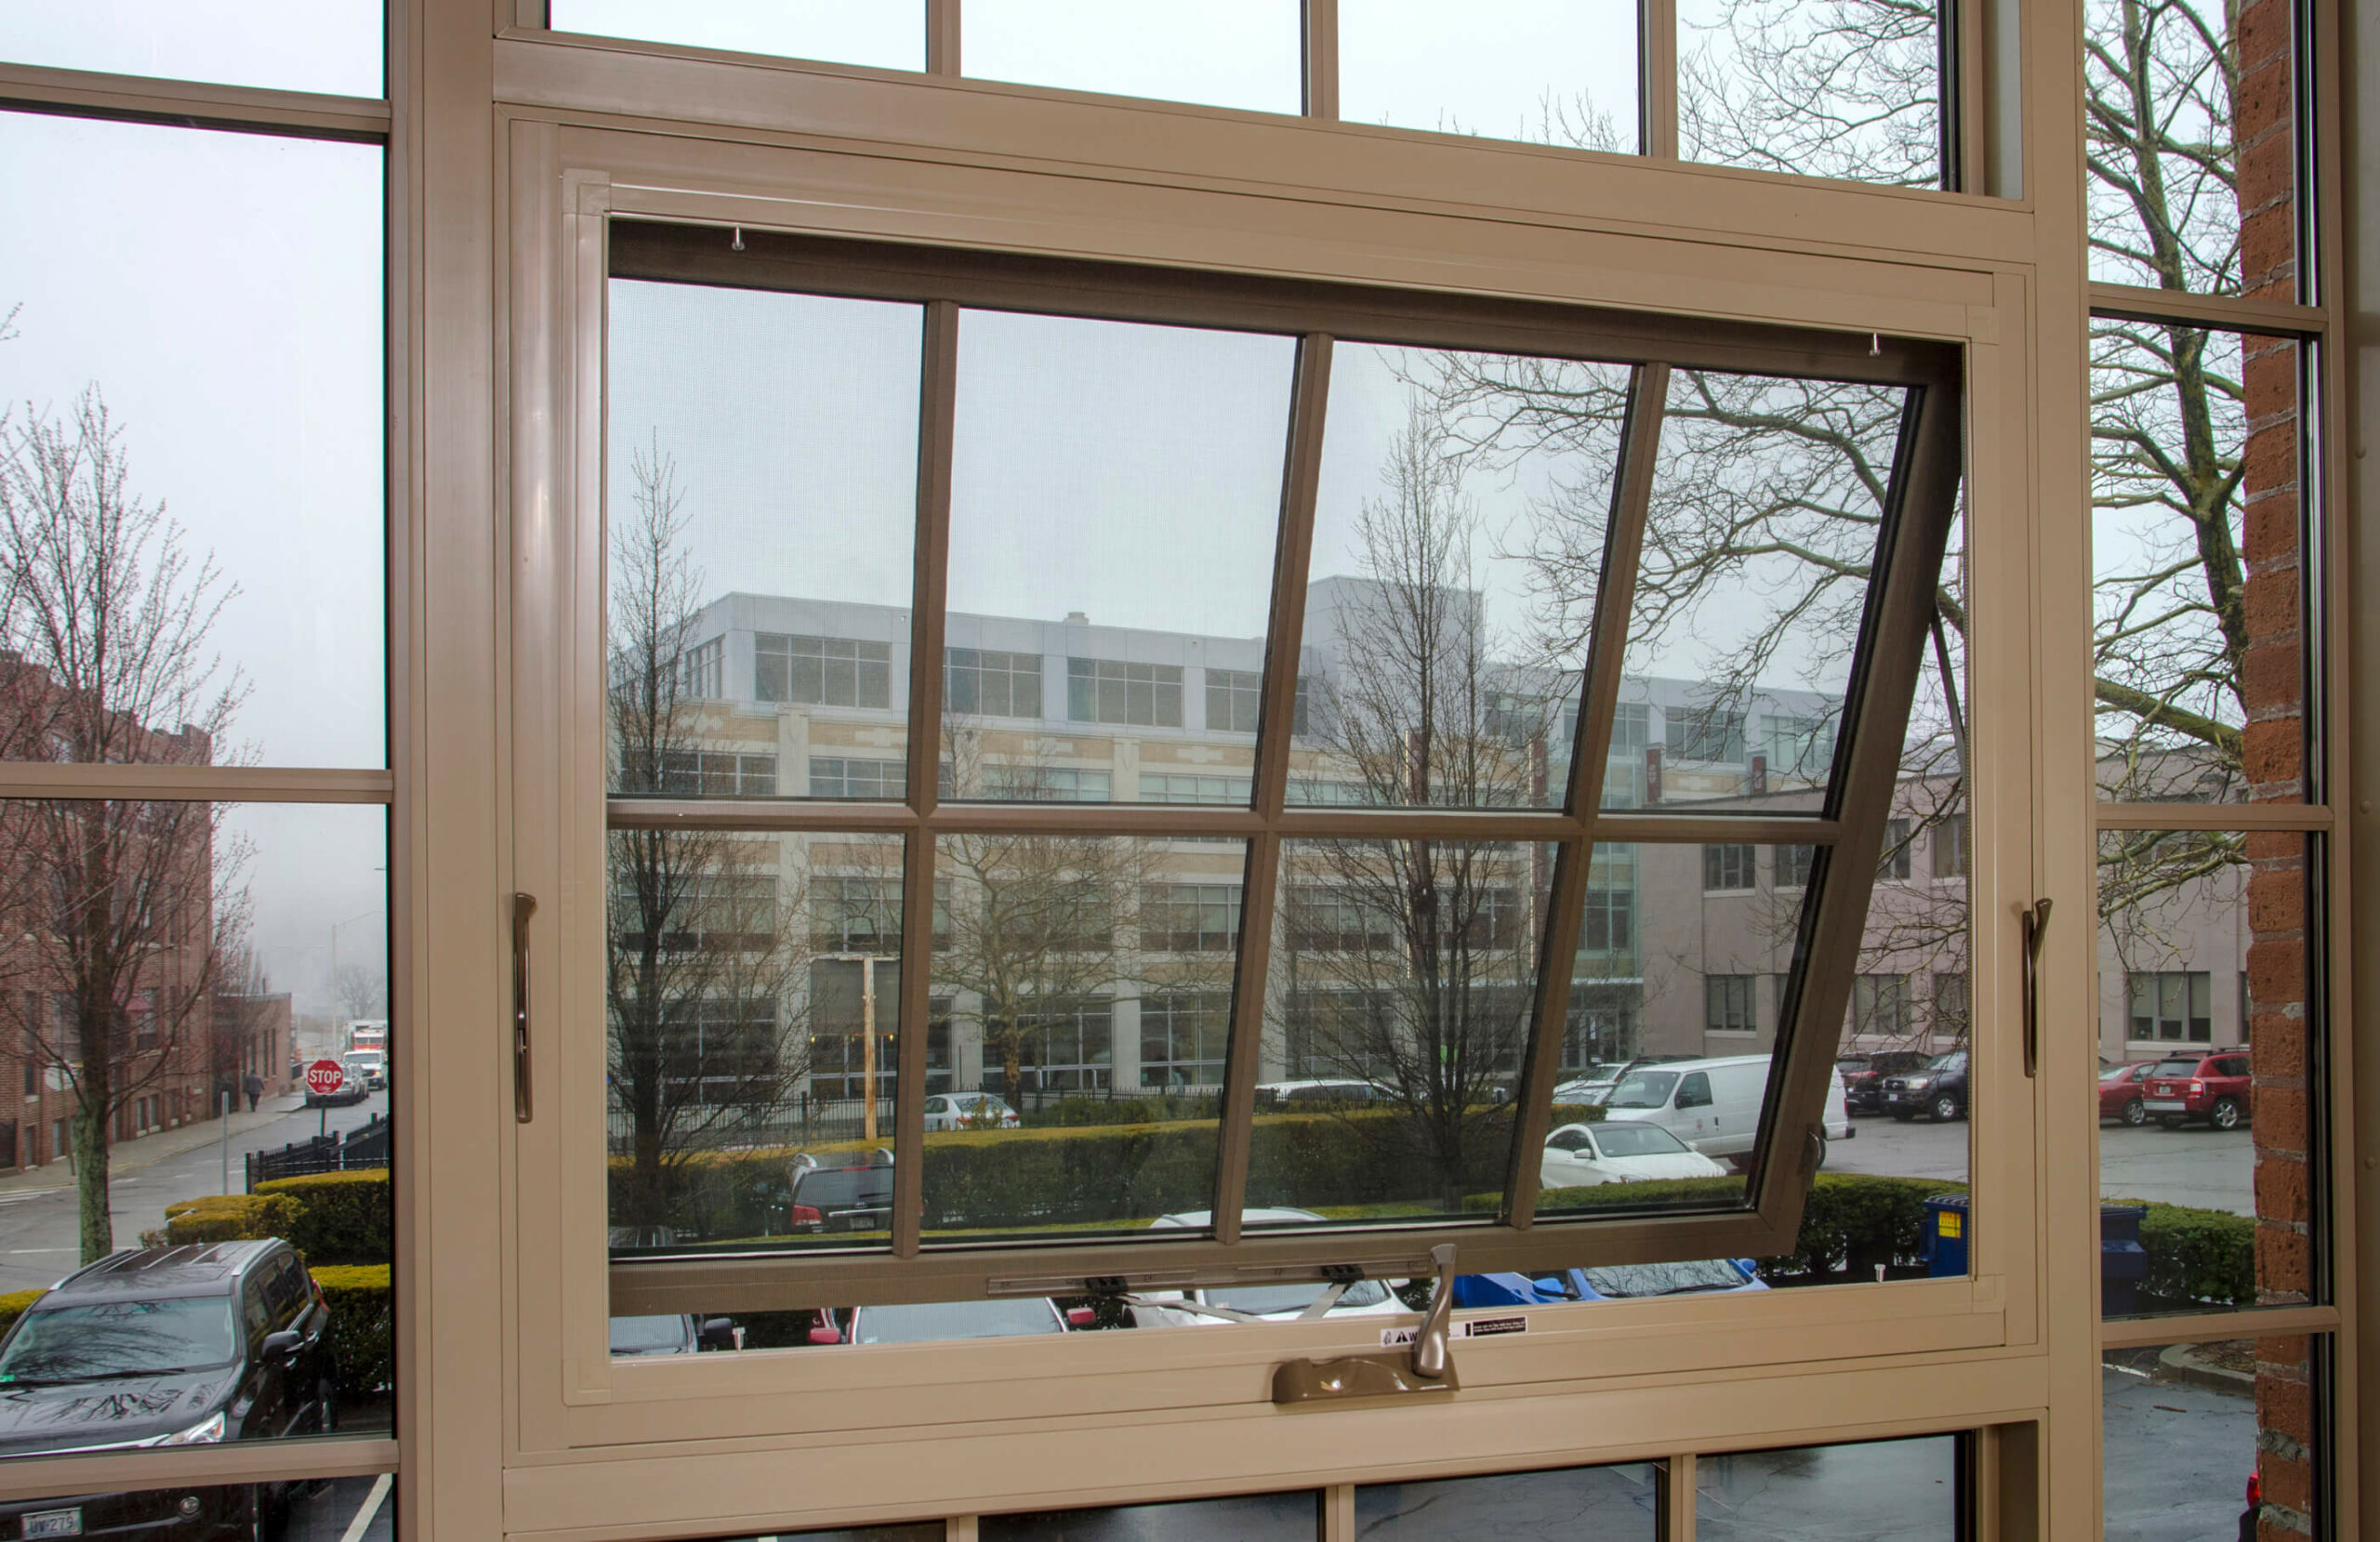 Photo of Kolbe Forgent windows